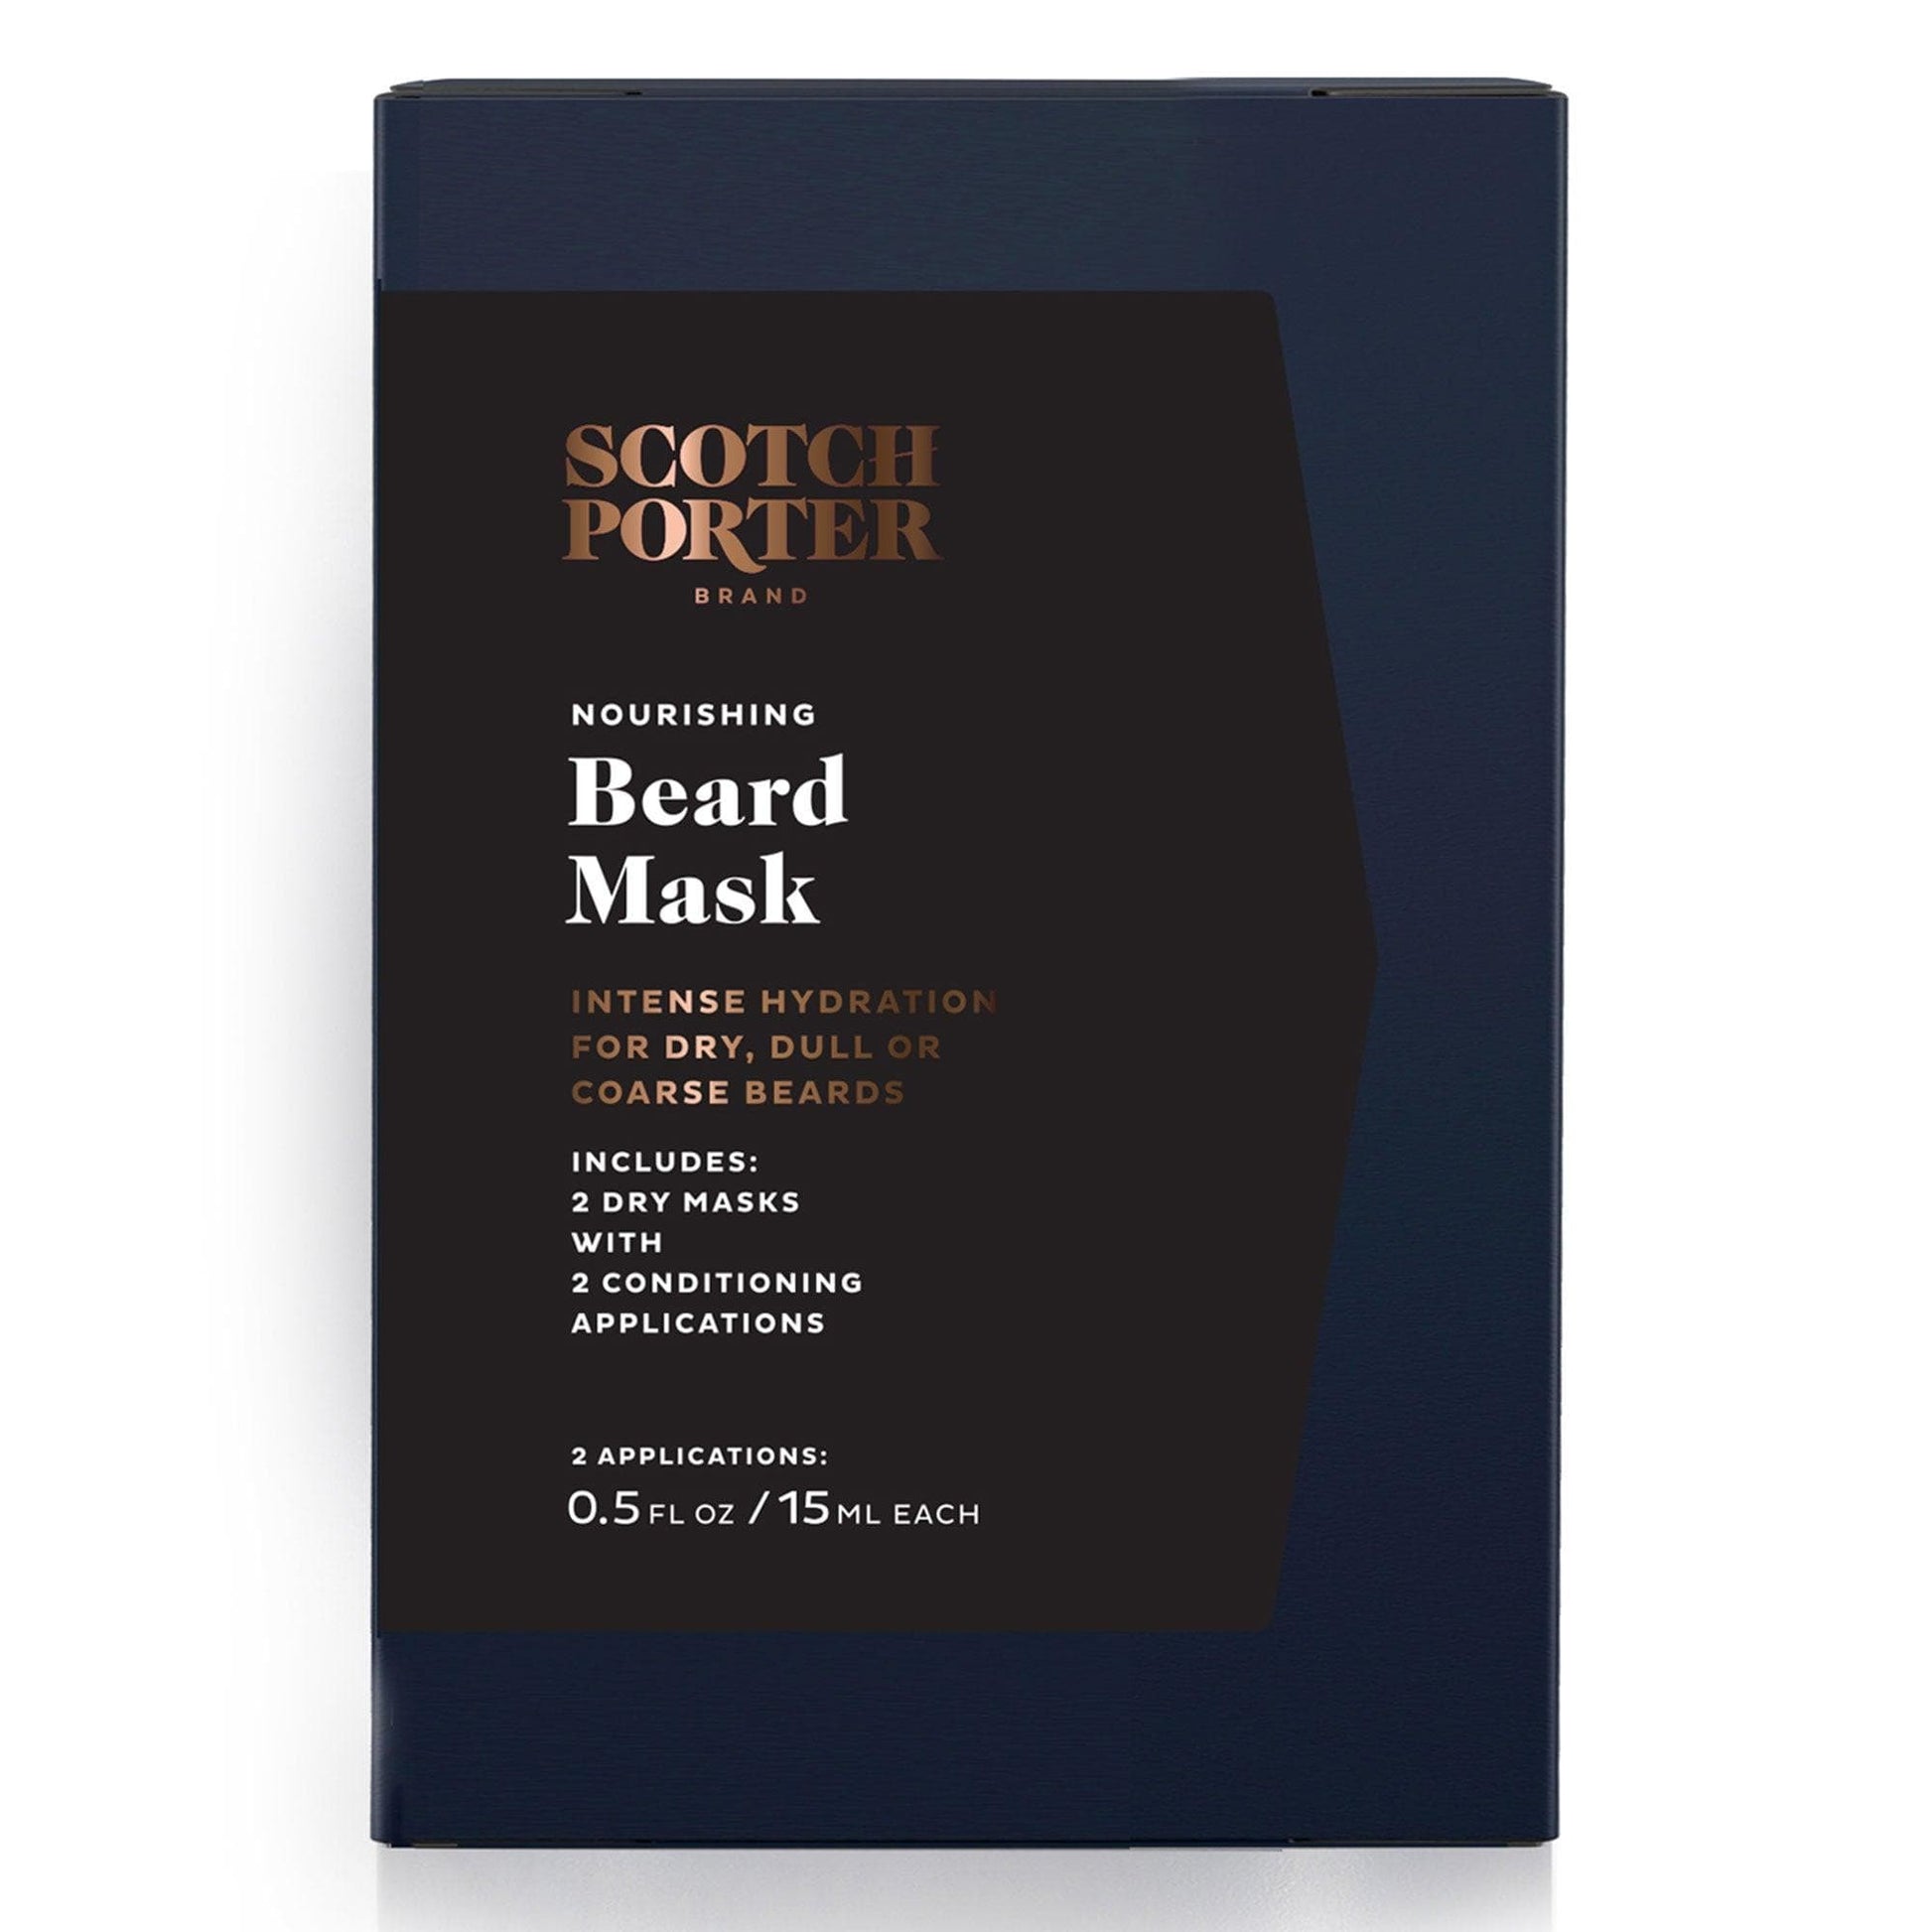 SCOTCH PORTER BRAND Beard Care Products Nourishing Beard Mask: Get for a Healthier Beard